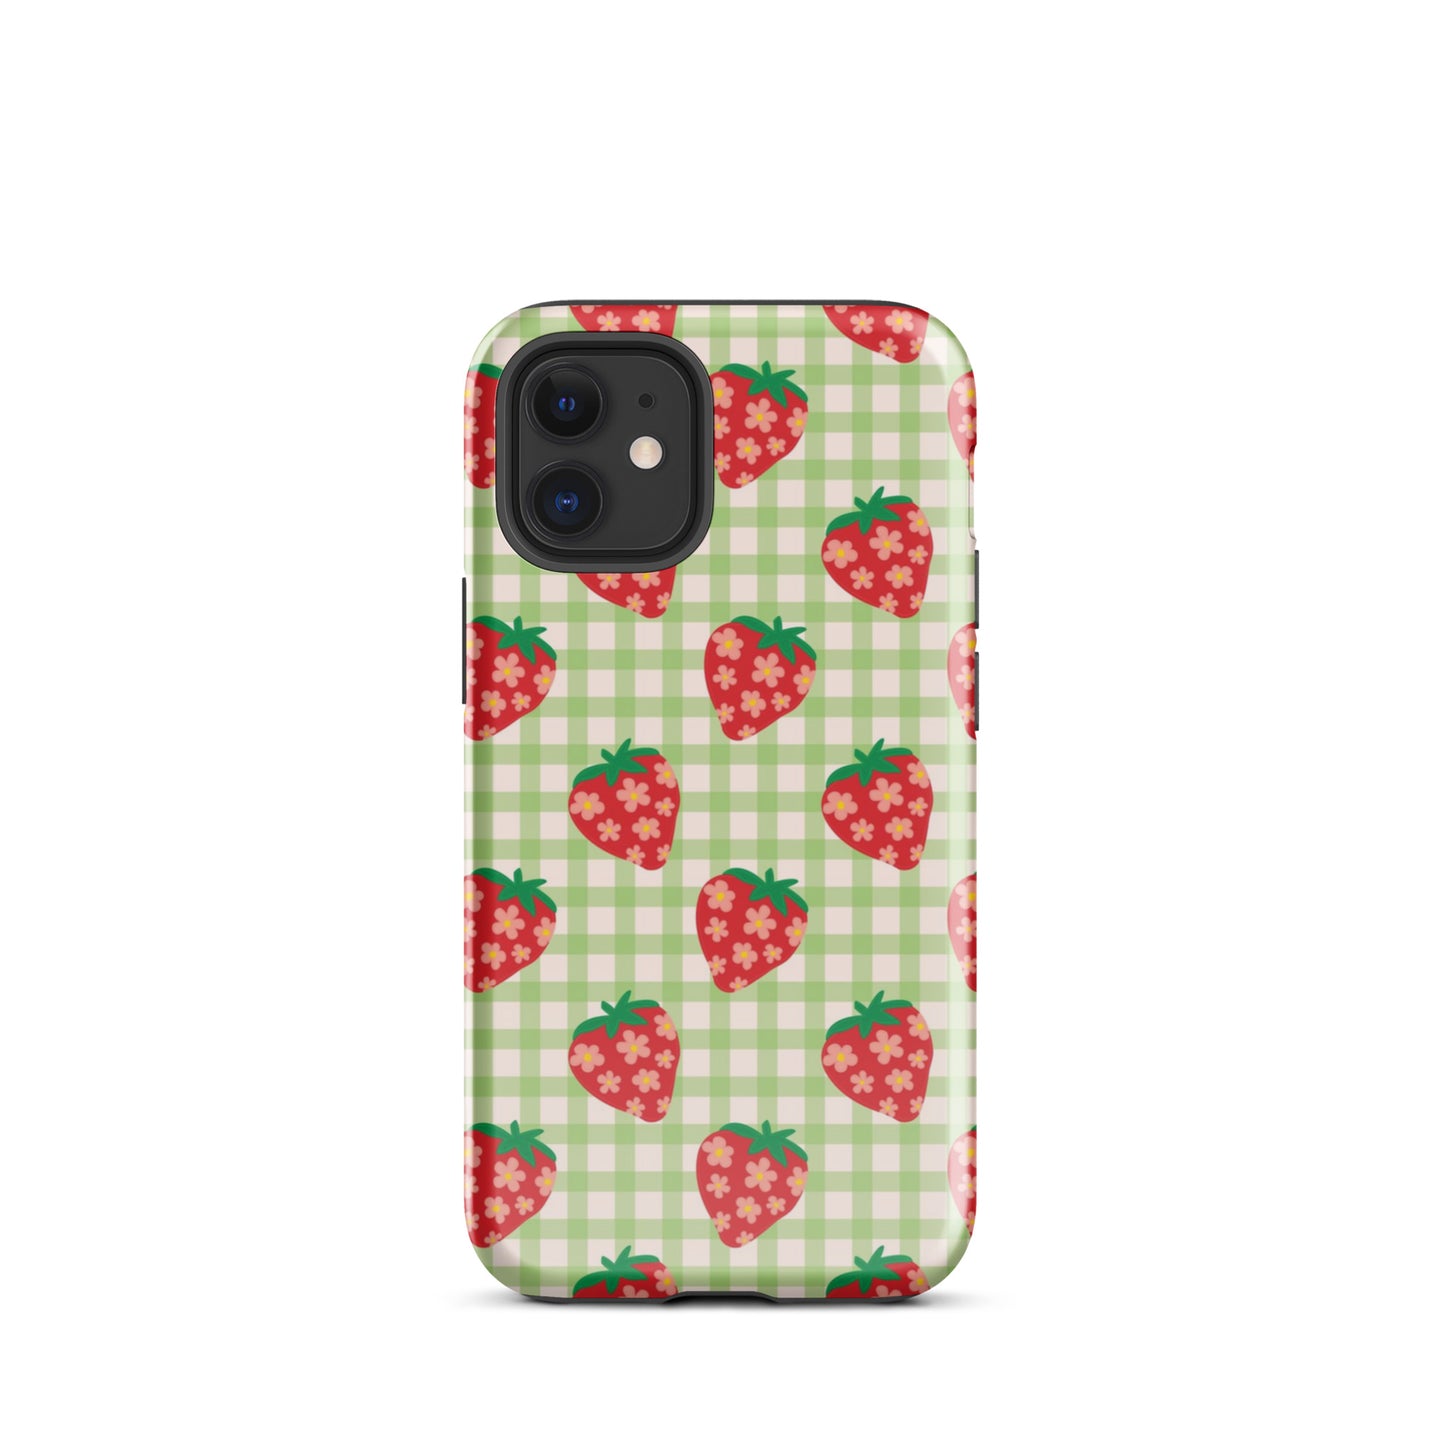 Strawberry Picnic iPhone Case iPhone 12 mini Glossy